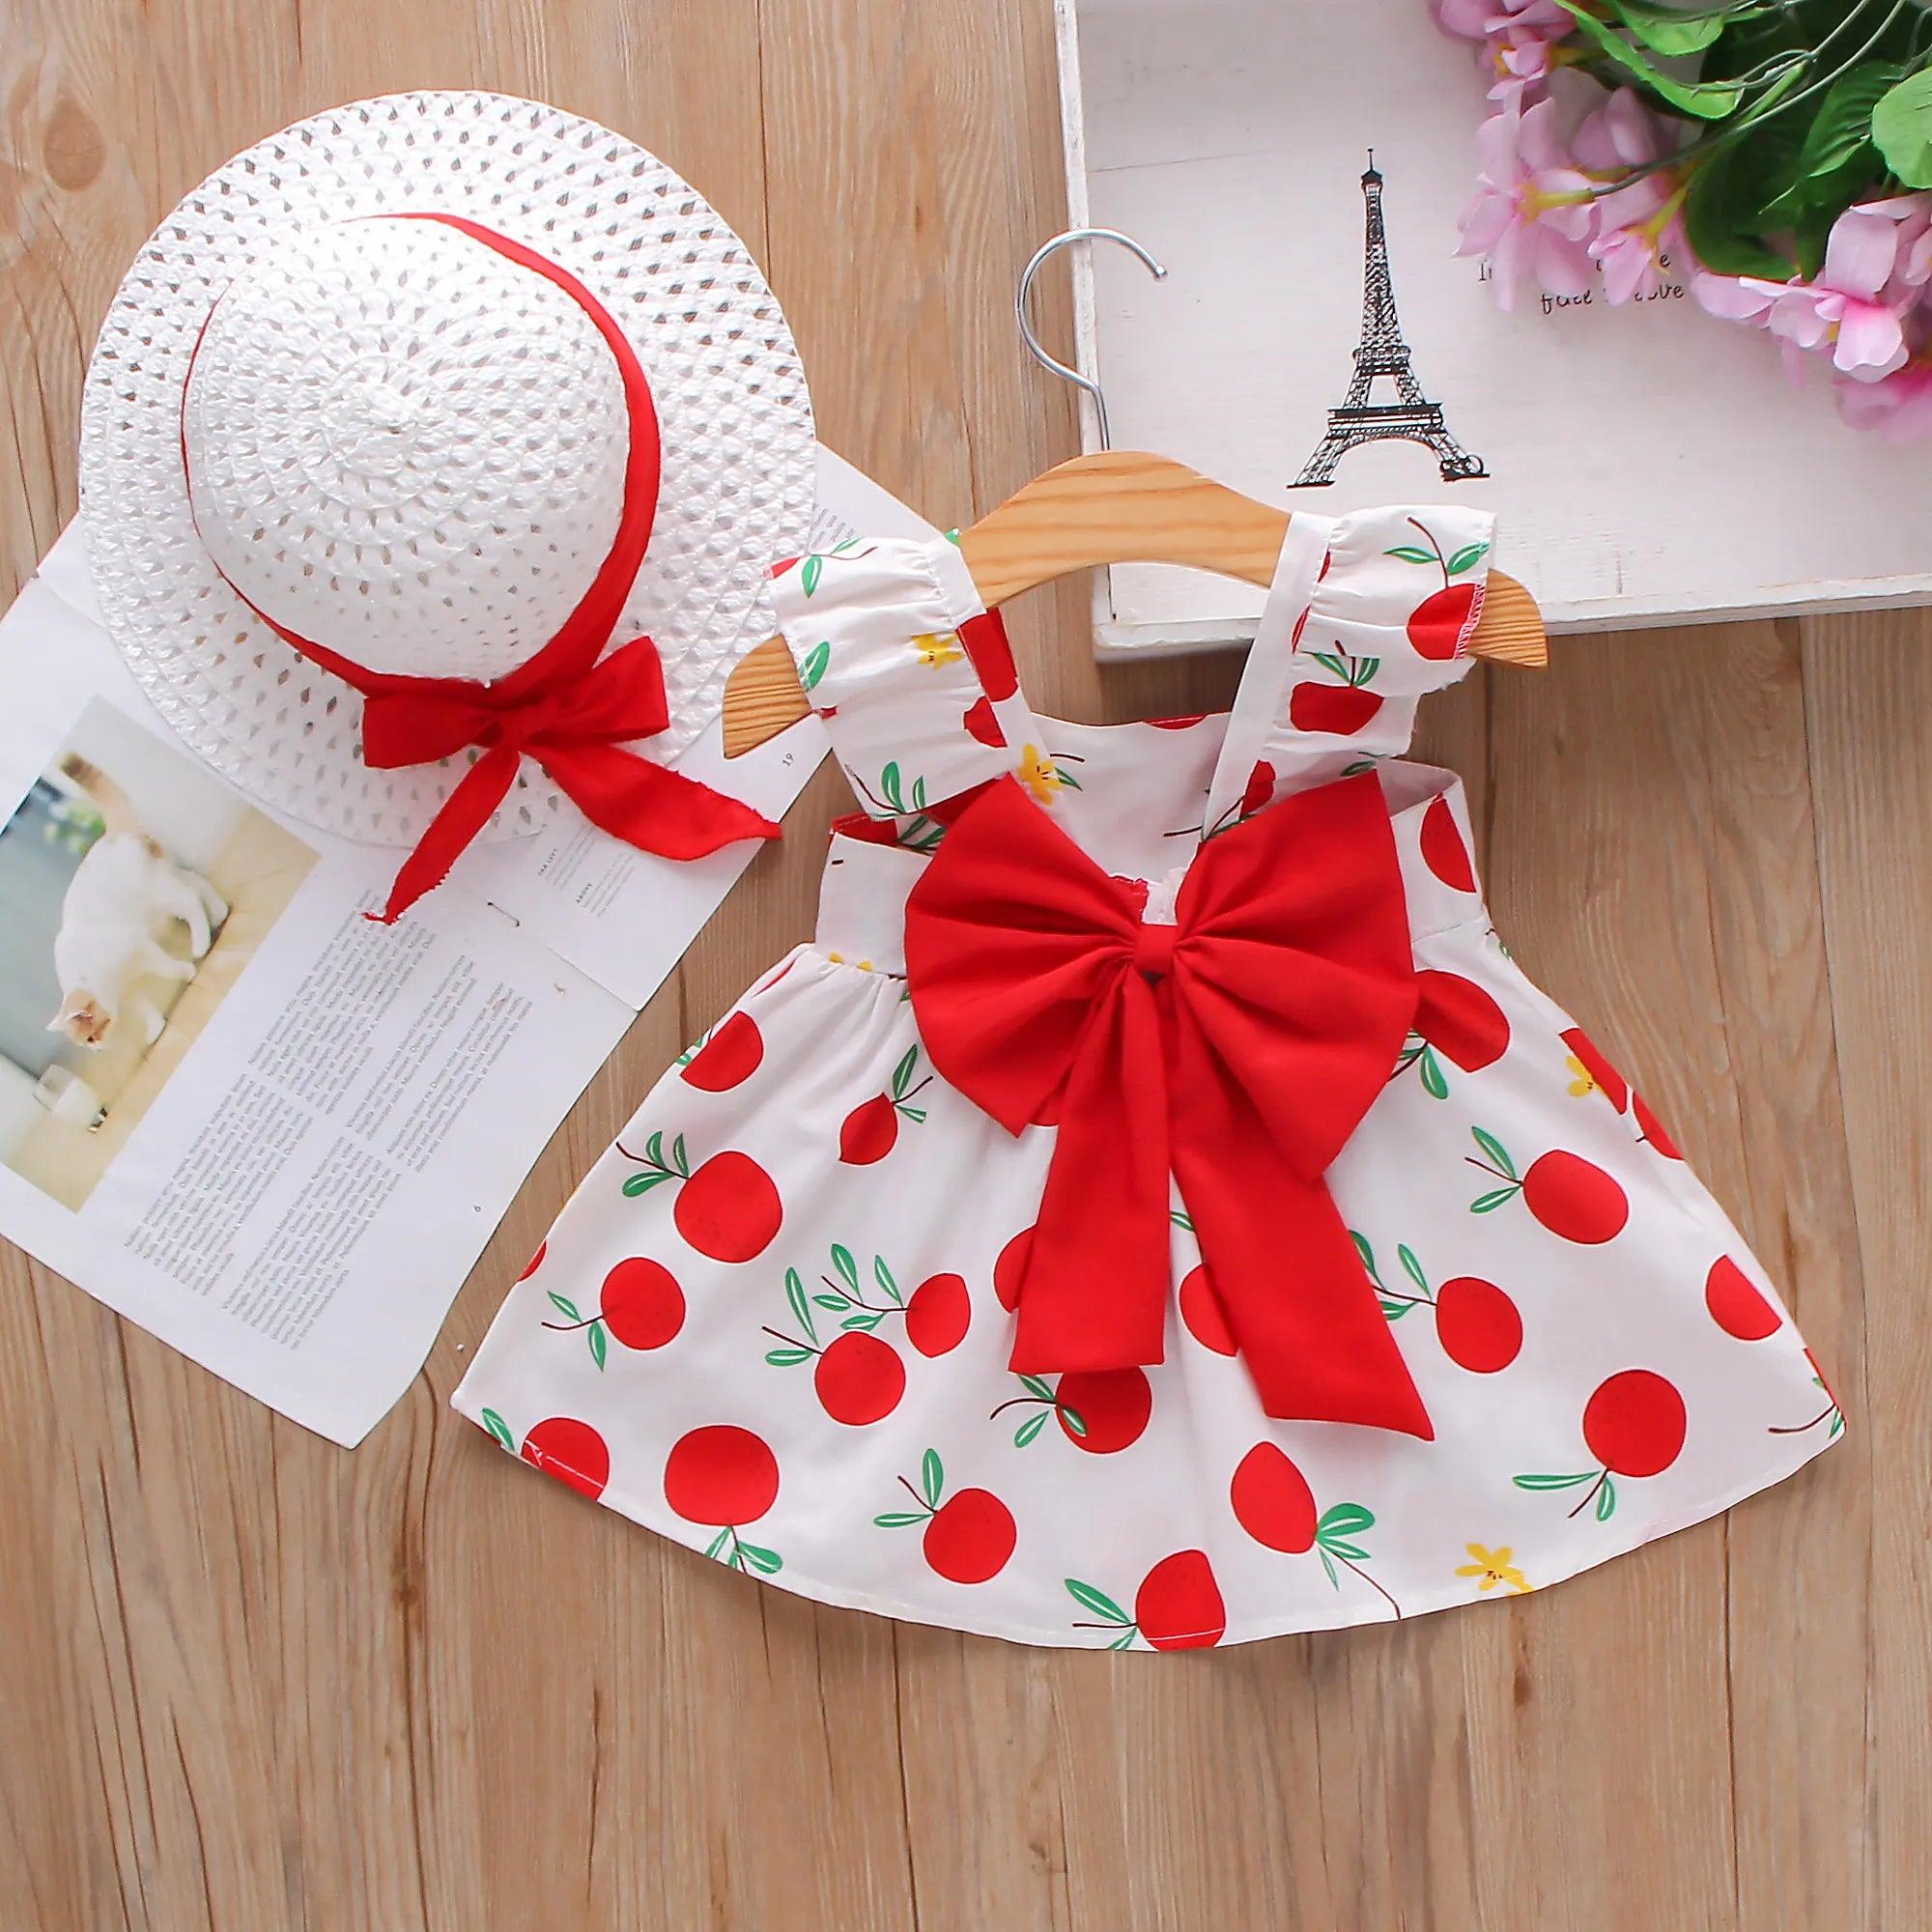 Fruity Delight Baby Girl Cotton Dress - Stylish Summer Apparel  ourlum.com   